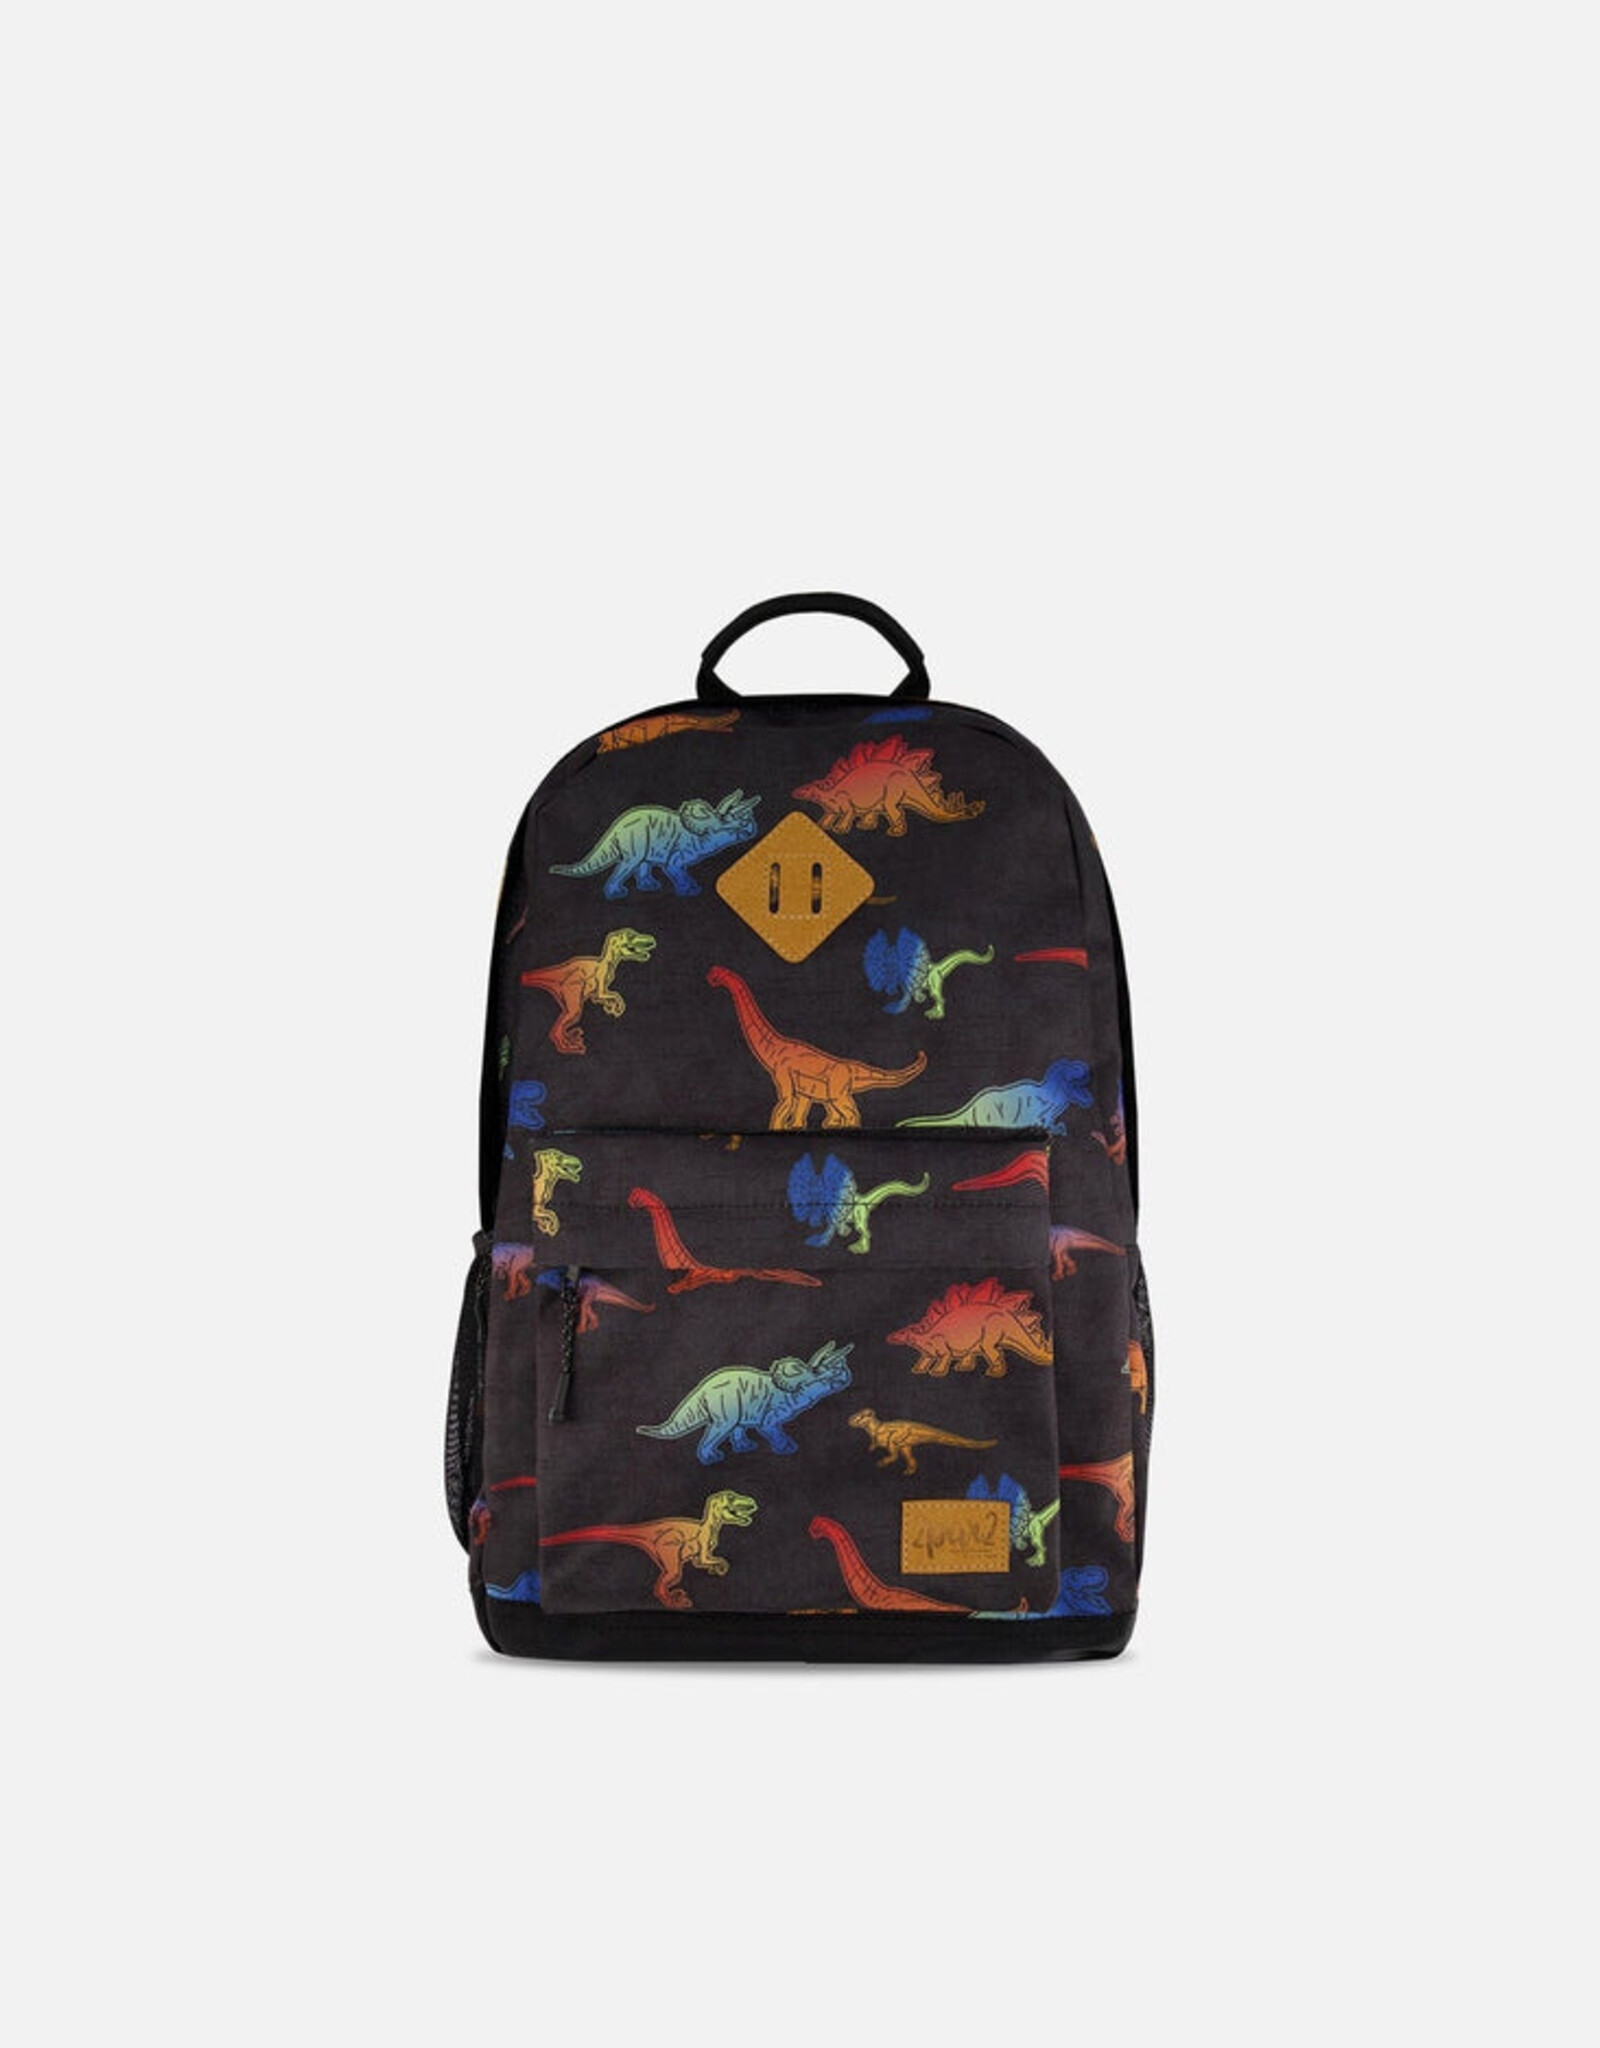 DeuxParDeux FA23 Kid Backpack